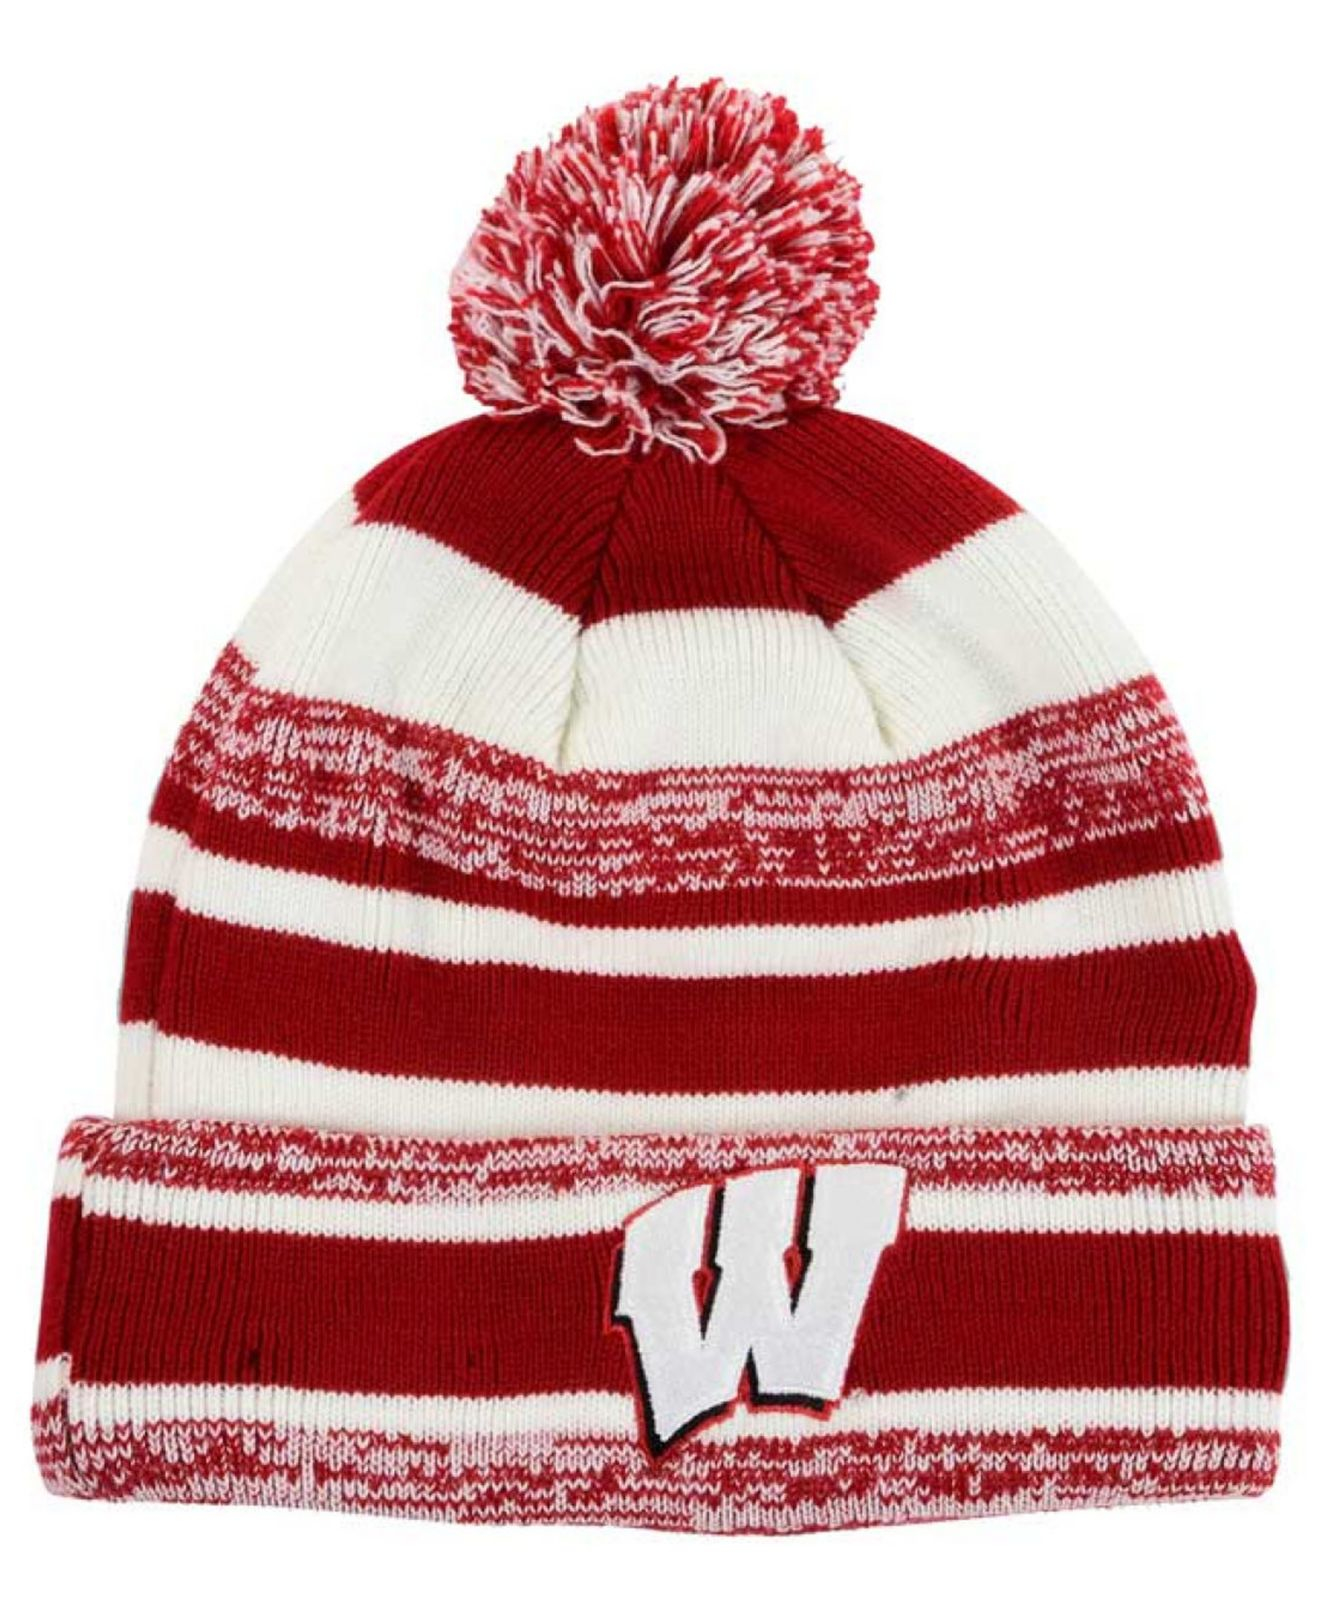 Lyst - Ktz Wisconsin Badgers Sport Knit Hat in Red for Men